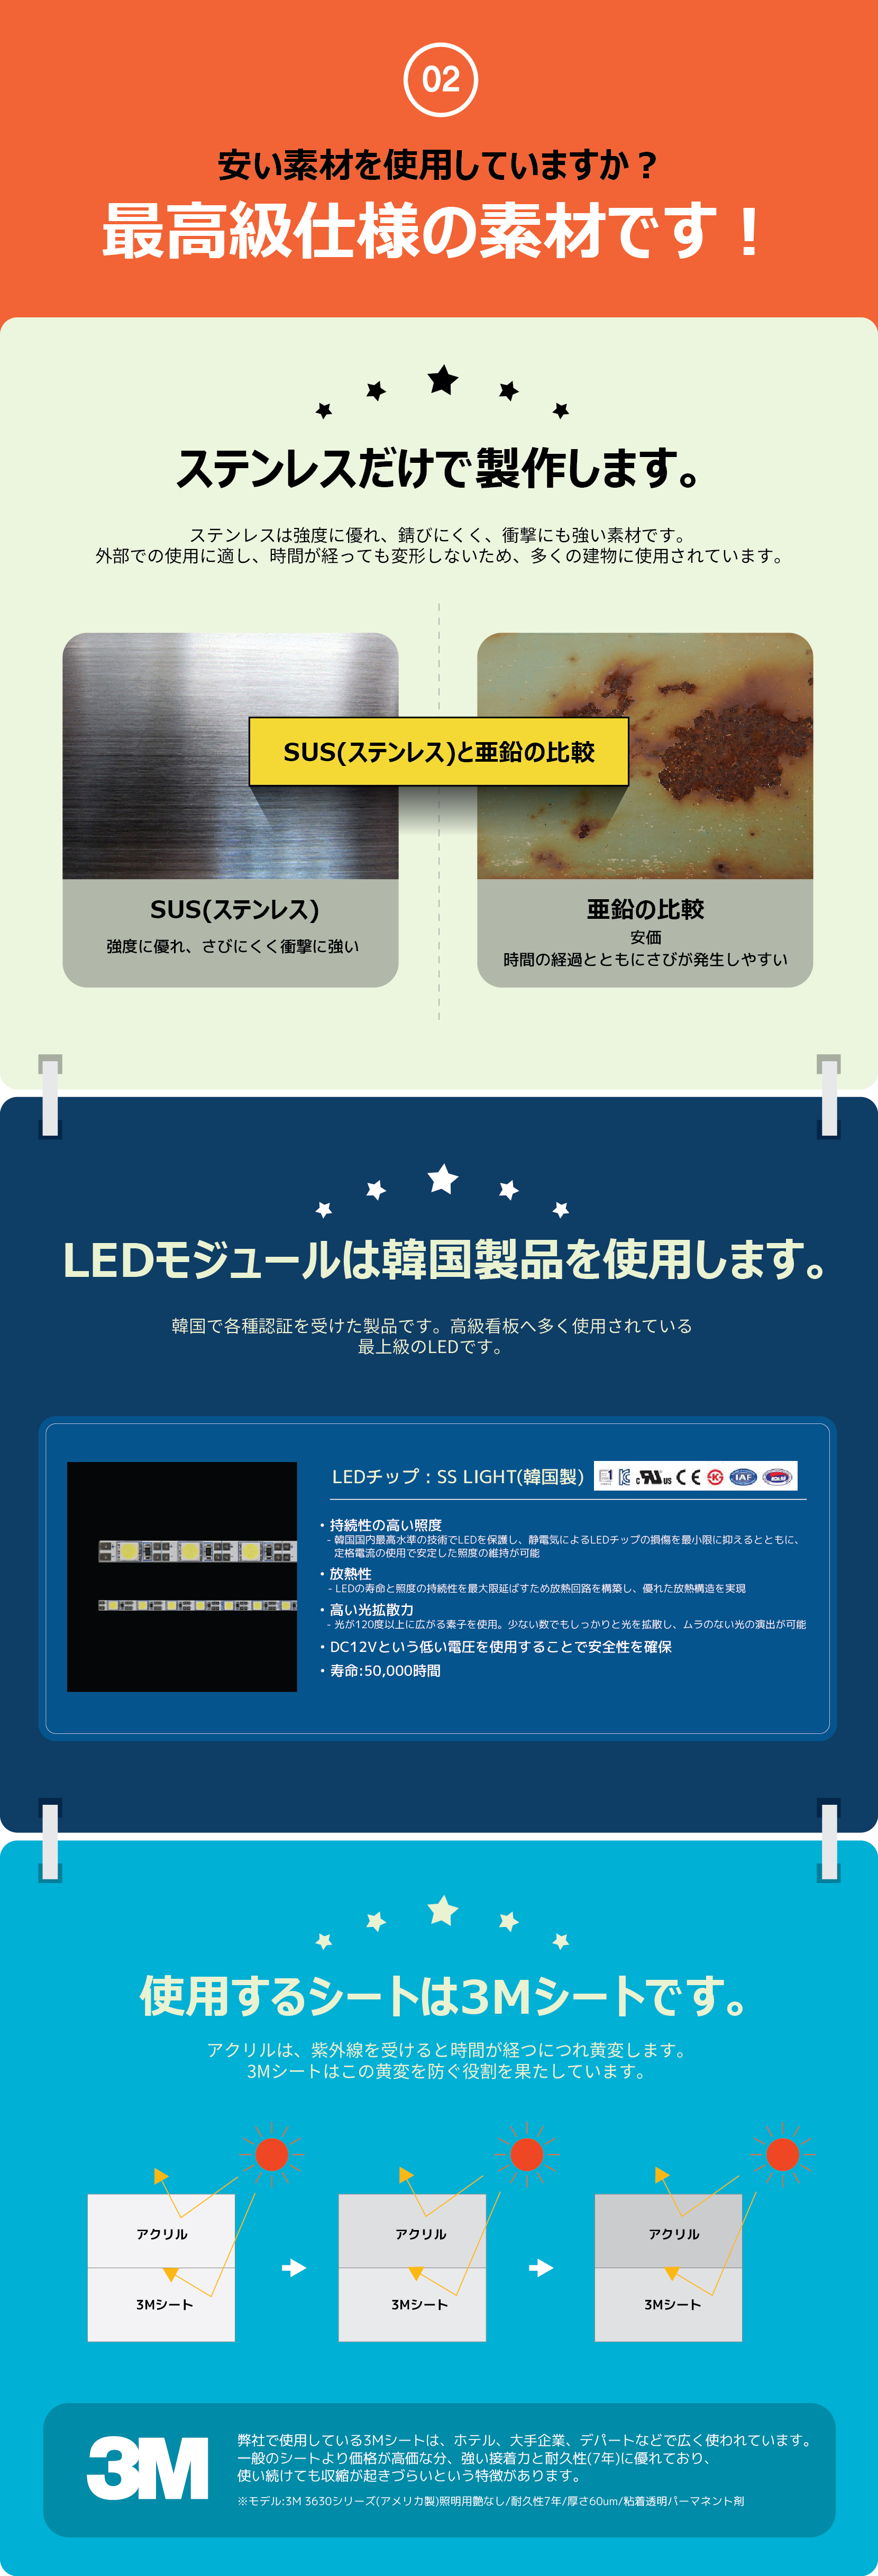 LED-看板-kanban-文字チャンネル-dflux-ディーフラックス-6-01.jpg